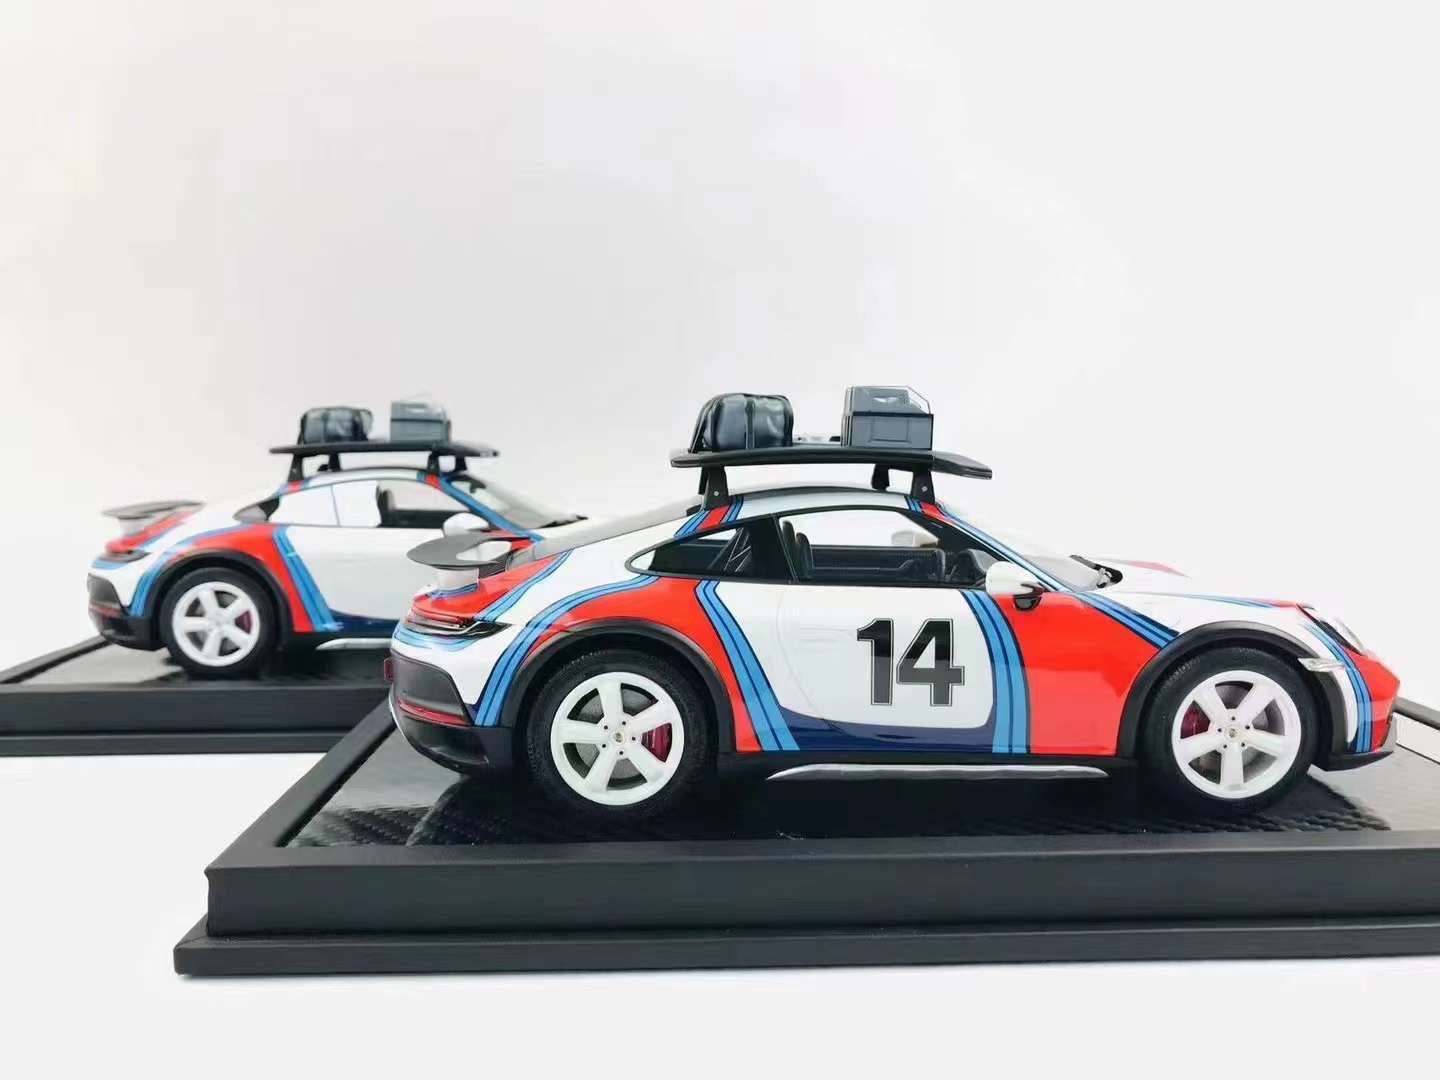 VIP Scale Models 1:18 Porsche 911 992 Dakar - Green Limited Edition of  99pcs. *No opening parts السعر : 120 دينار👍 #vipscalemodels…